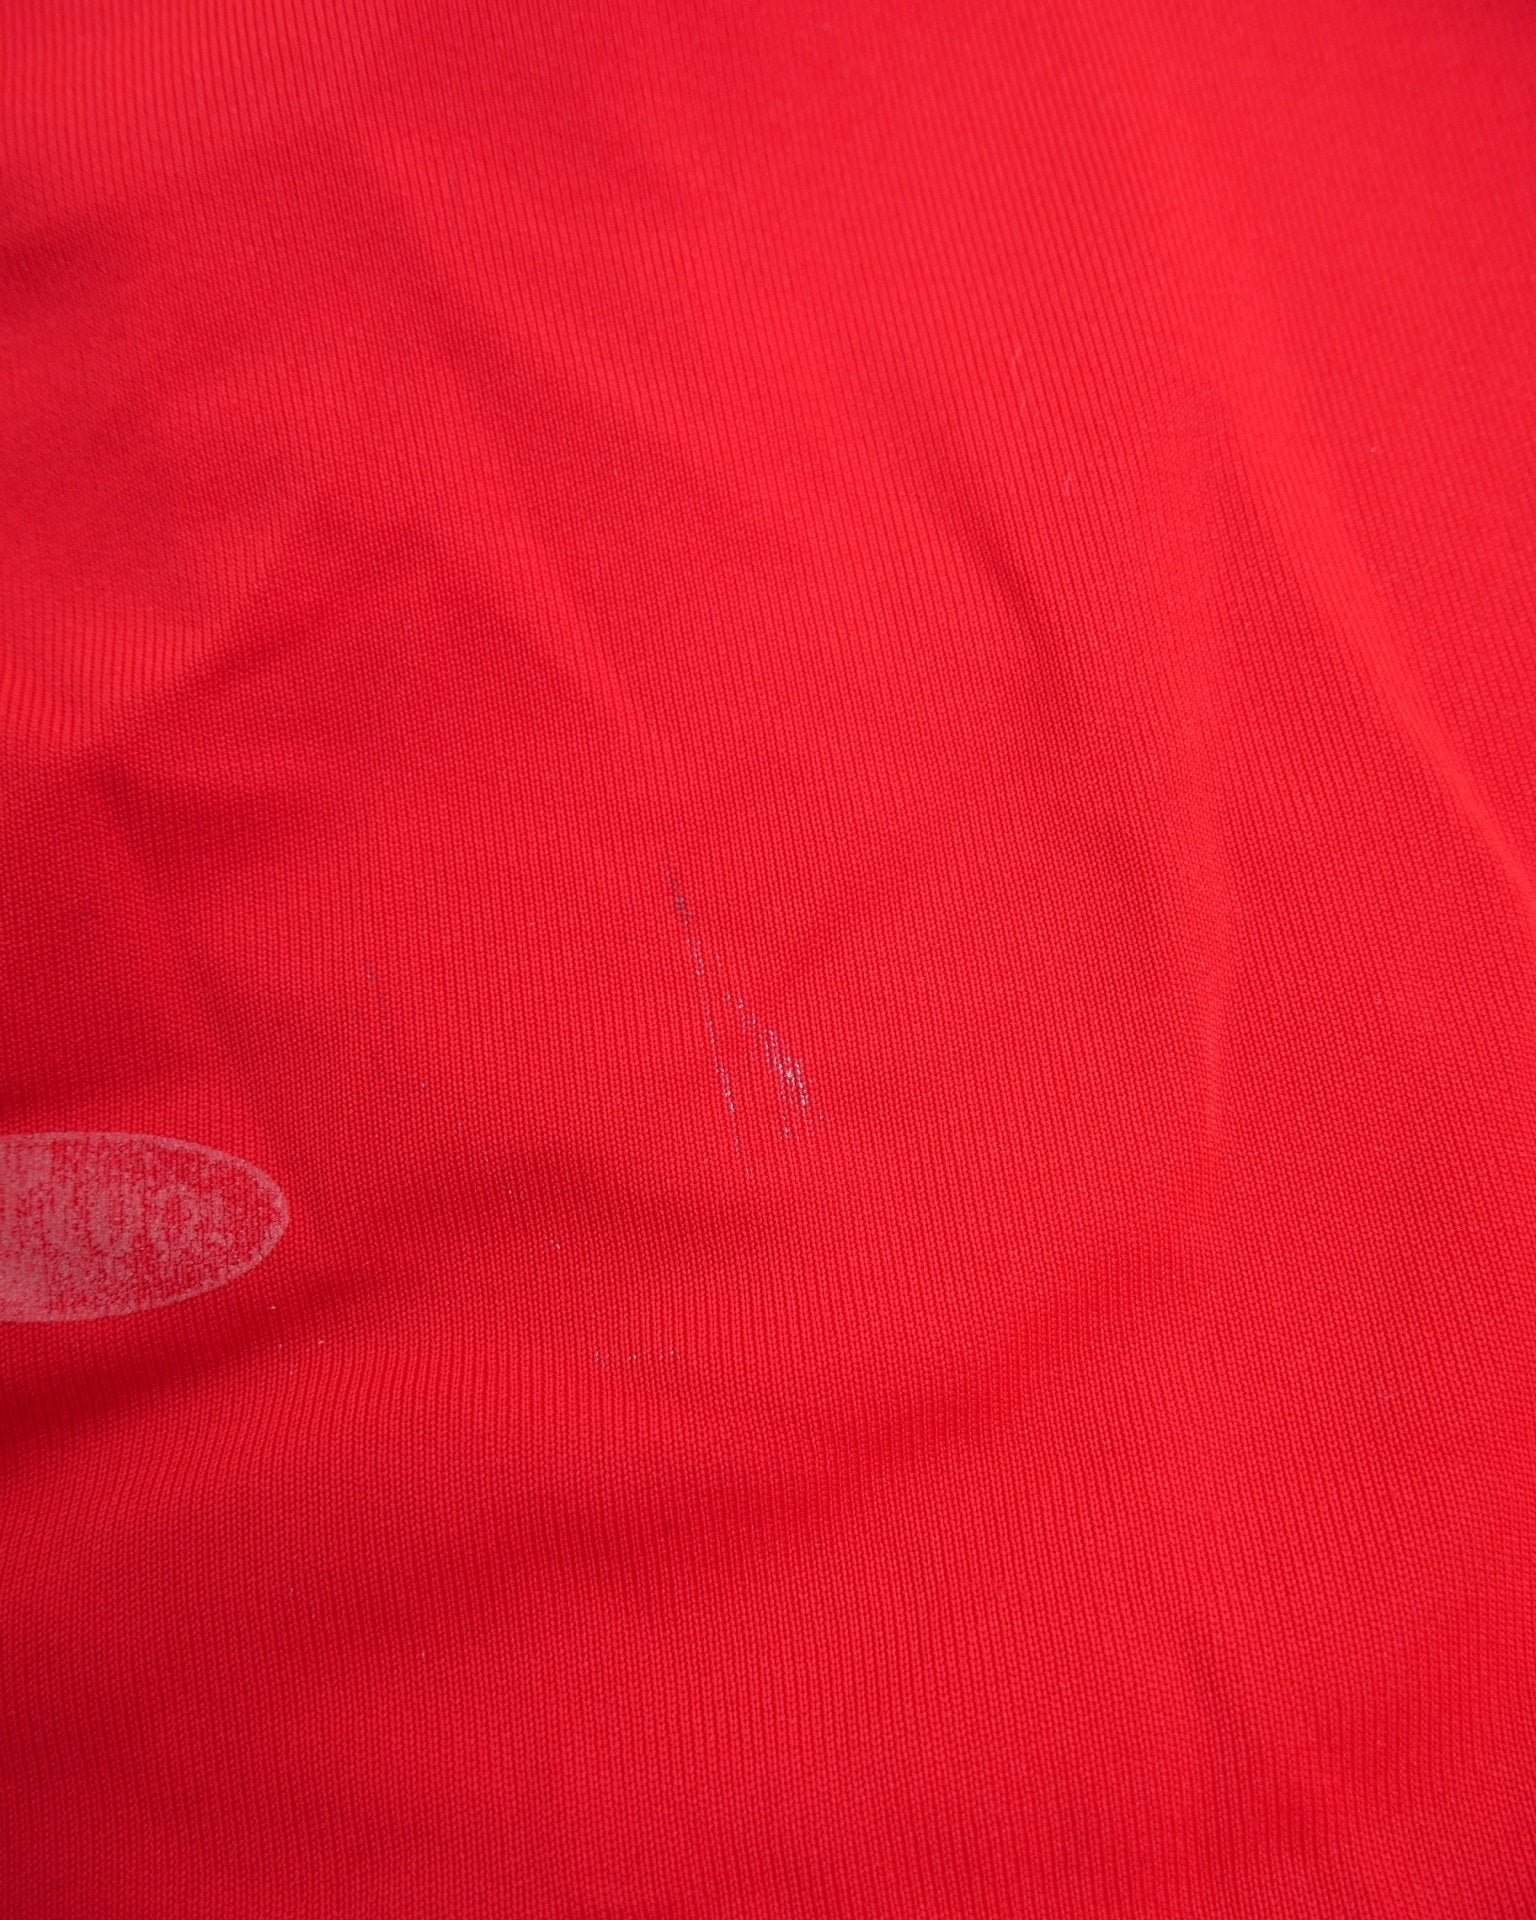 adidas E Pluribus Unum embroidered Logo red Jersey Shirt - Peeces